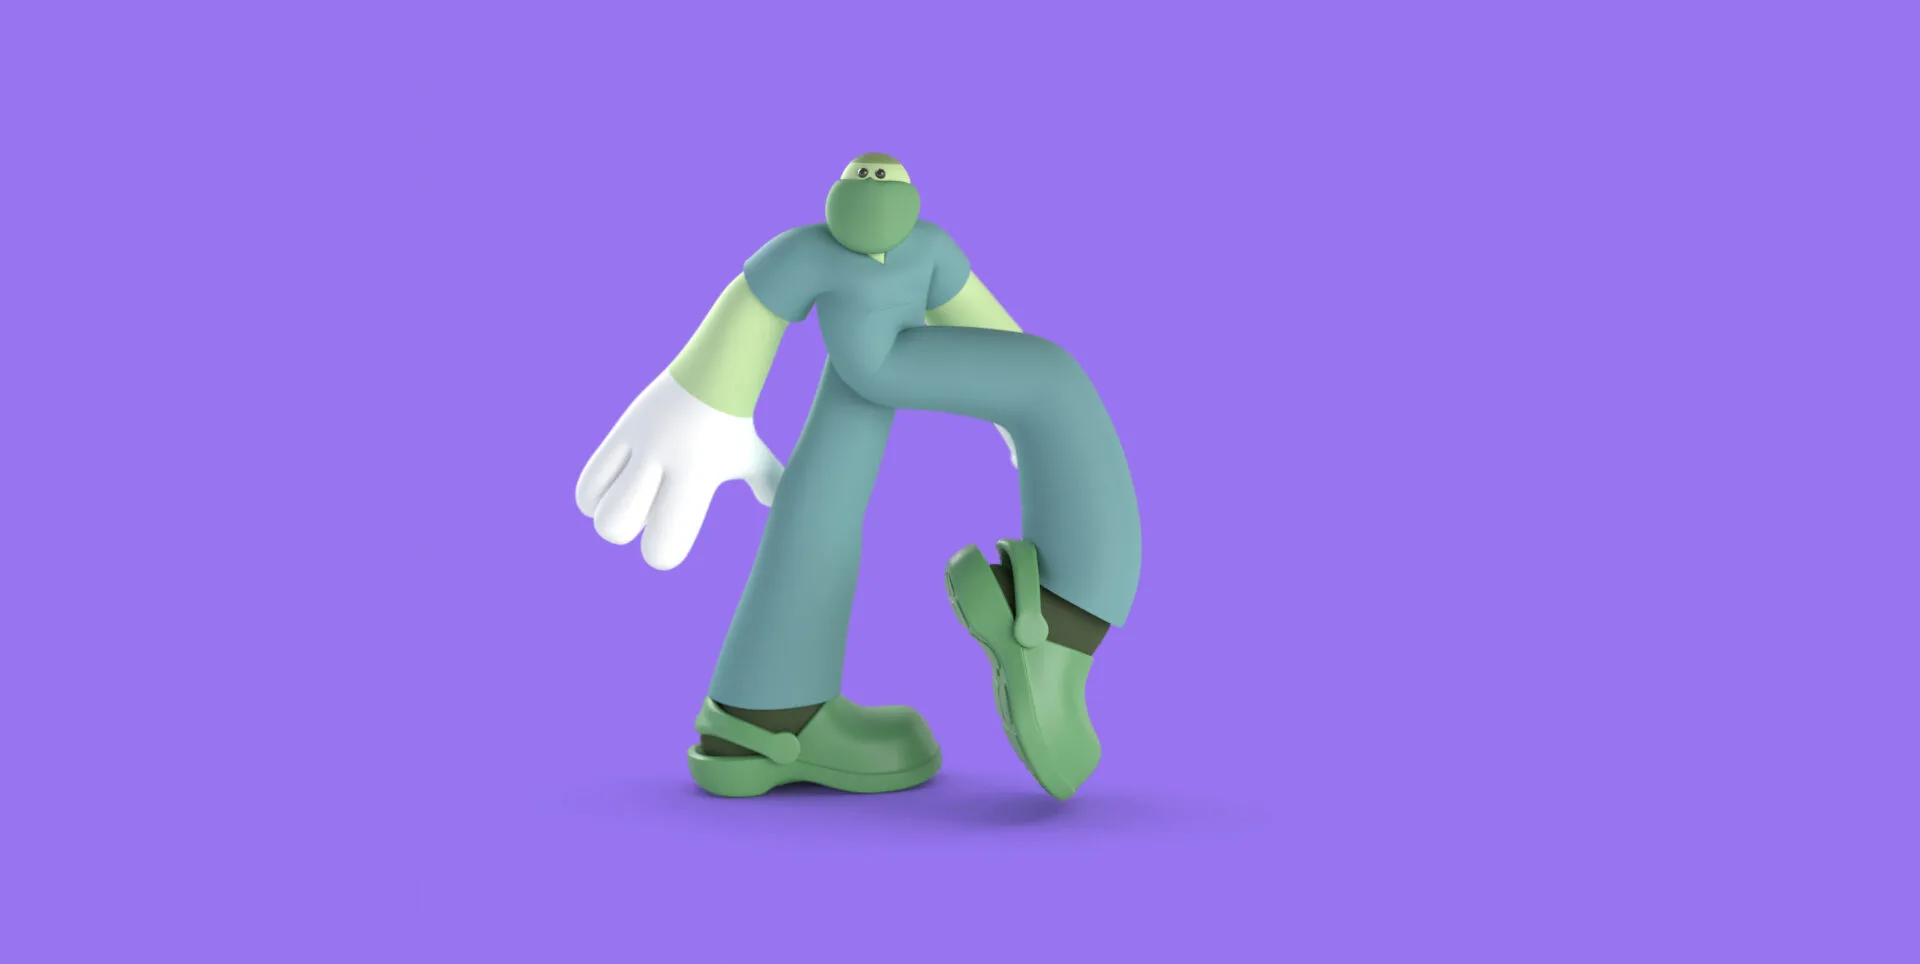 Animated employee dances the moonwalk on a purple background